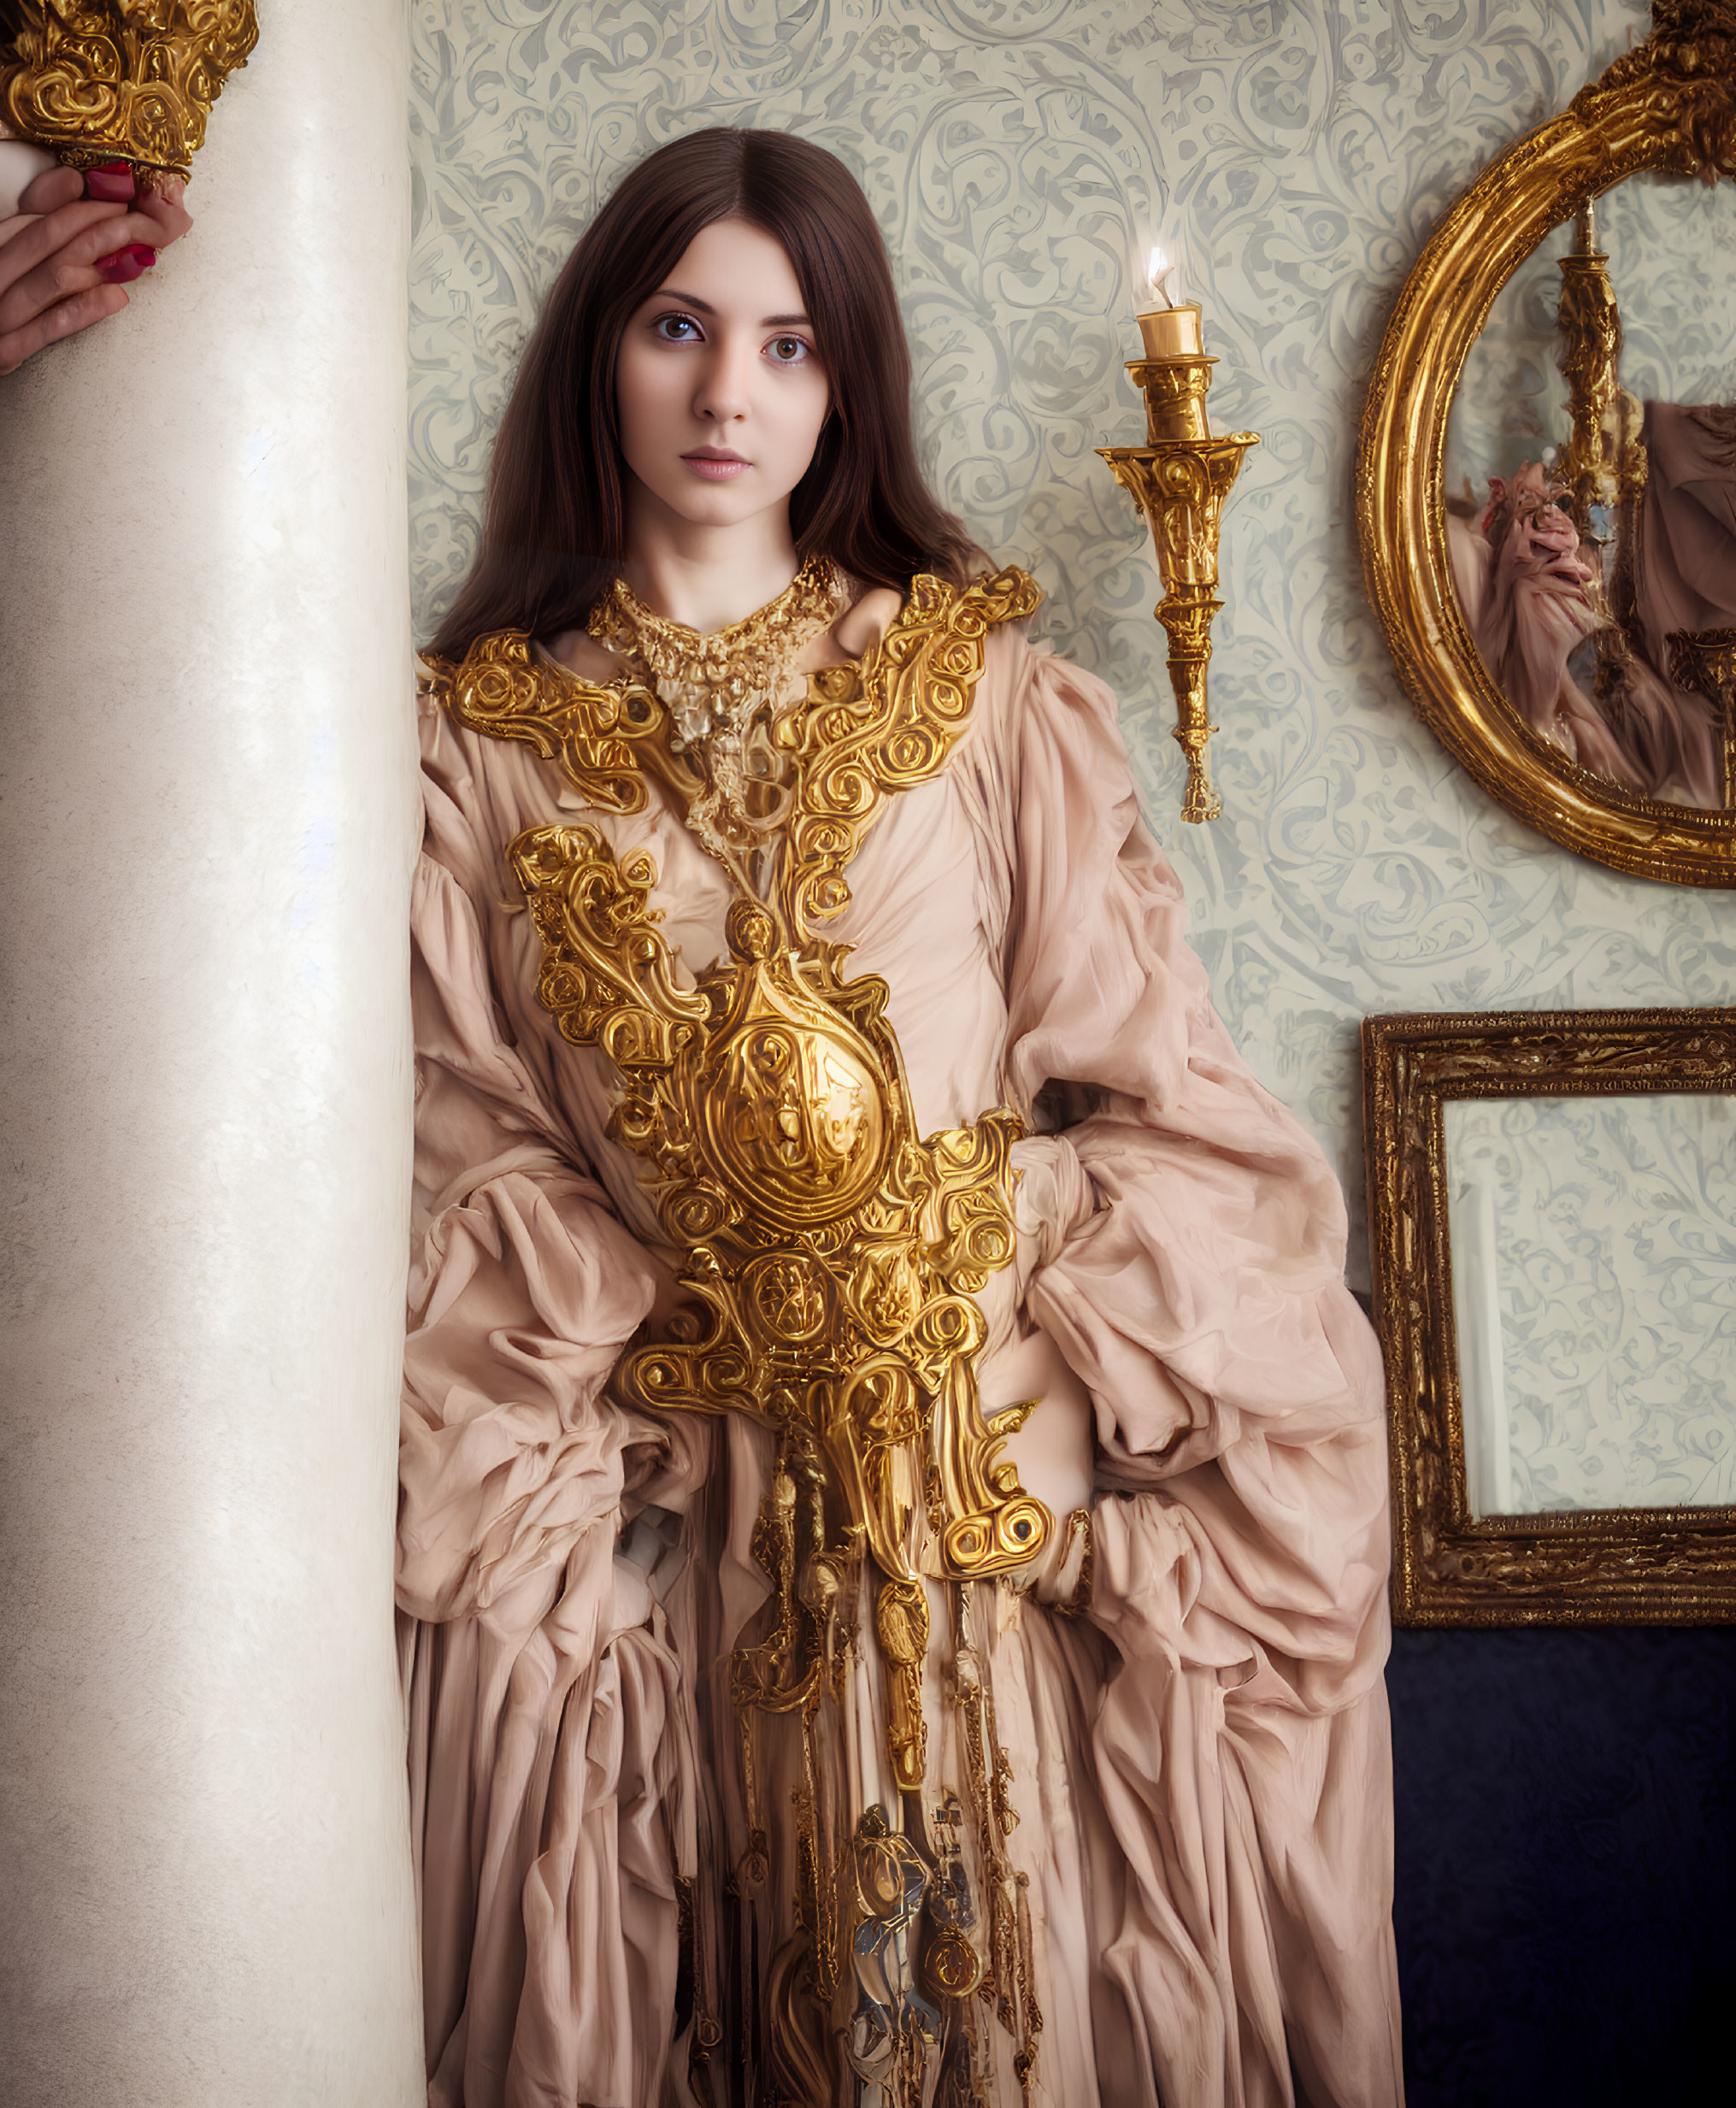 Elaborate historical dress with golden trim beside antique frames and pillar